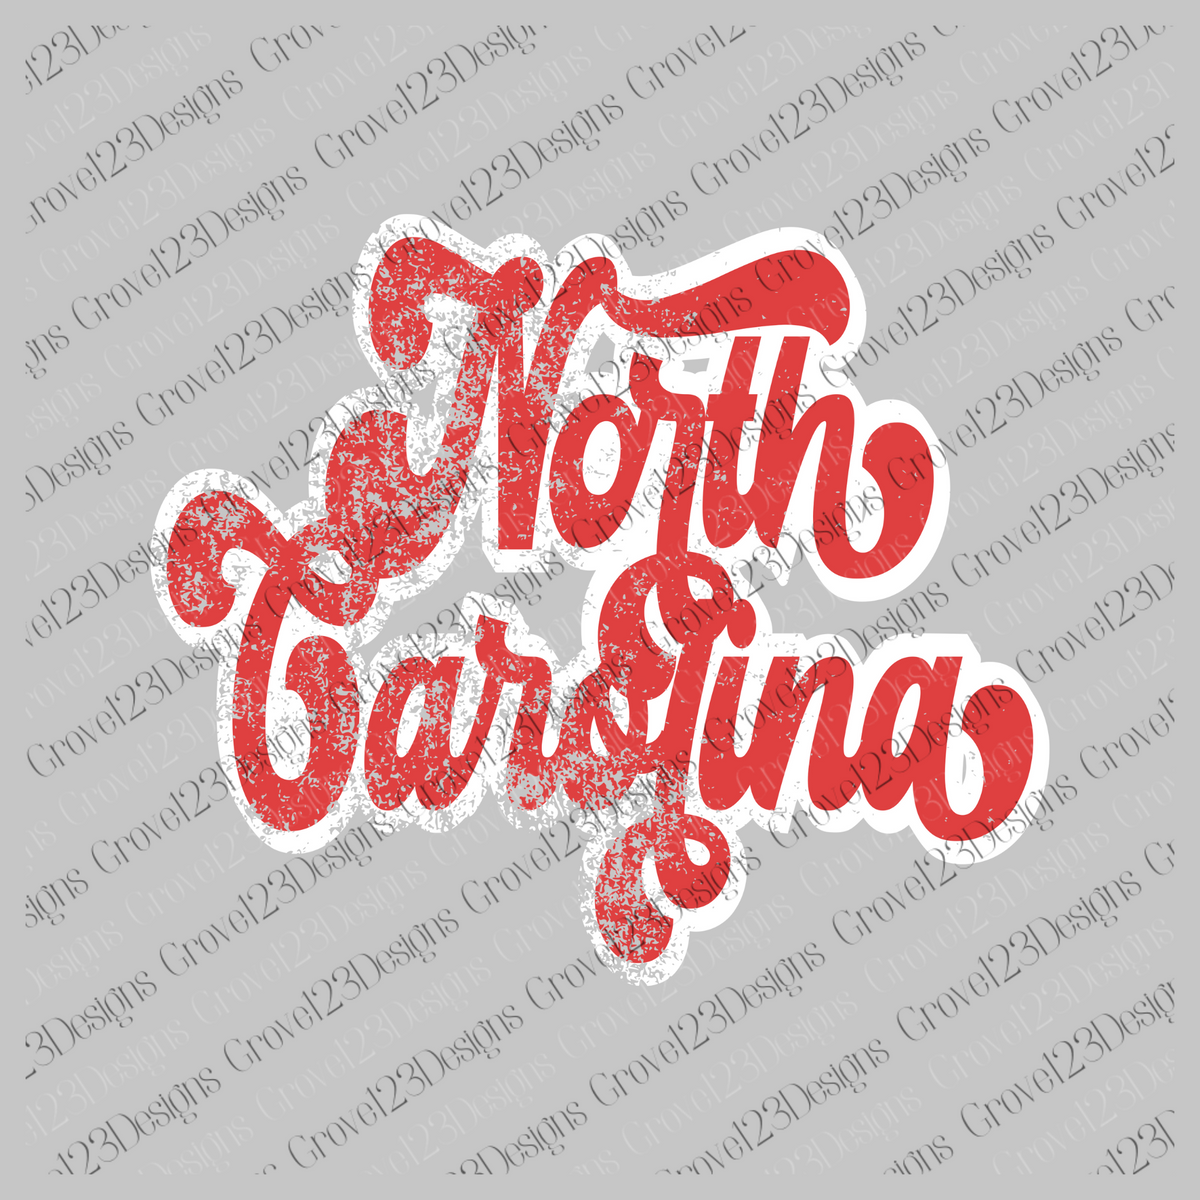 North Carolina Red & White Retro Shadow Distressed